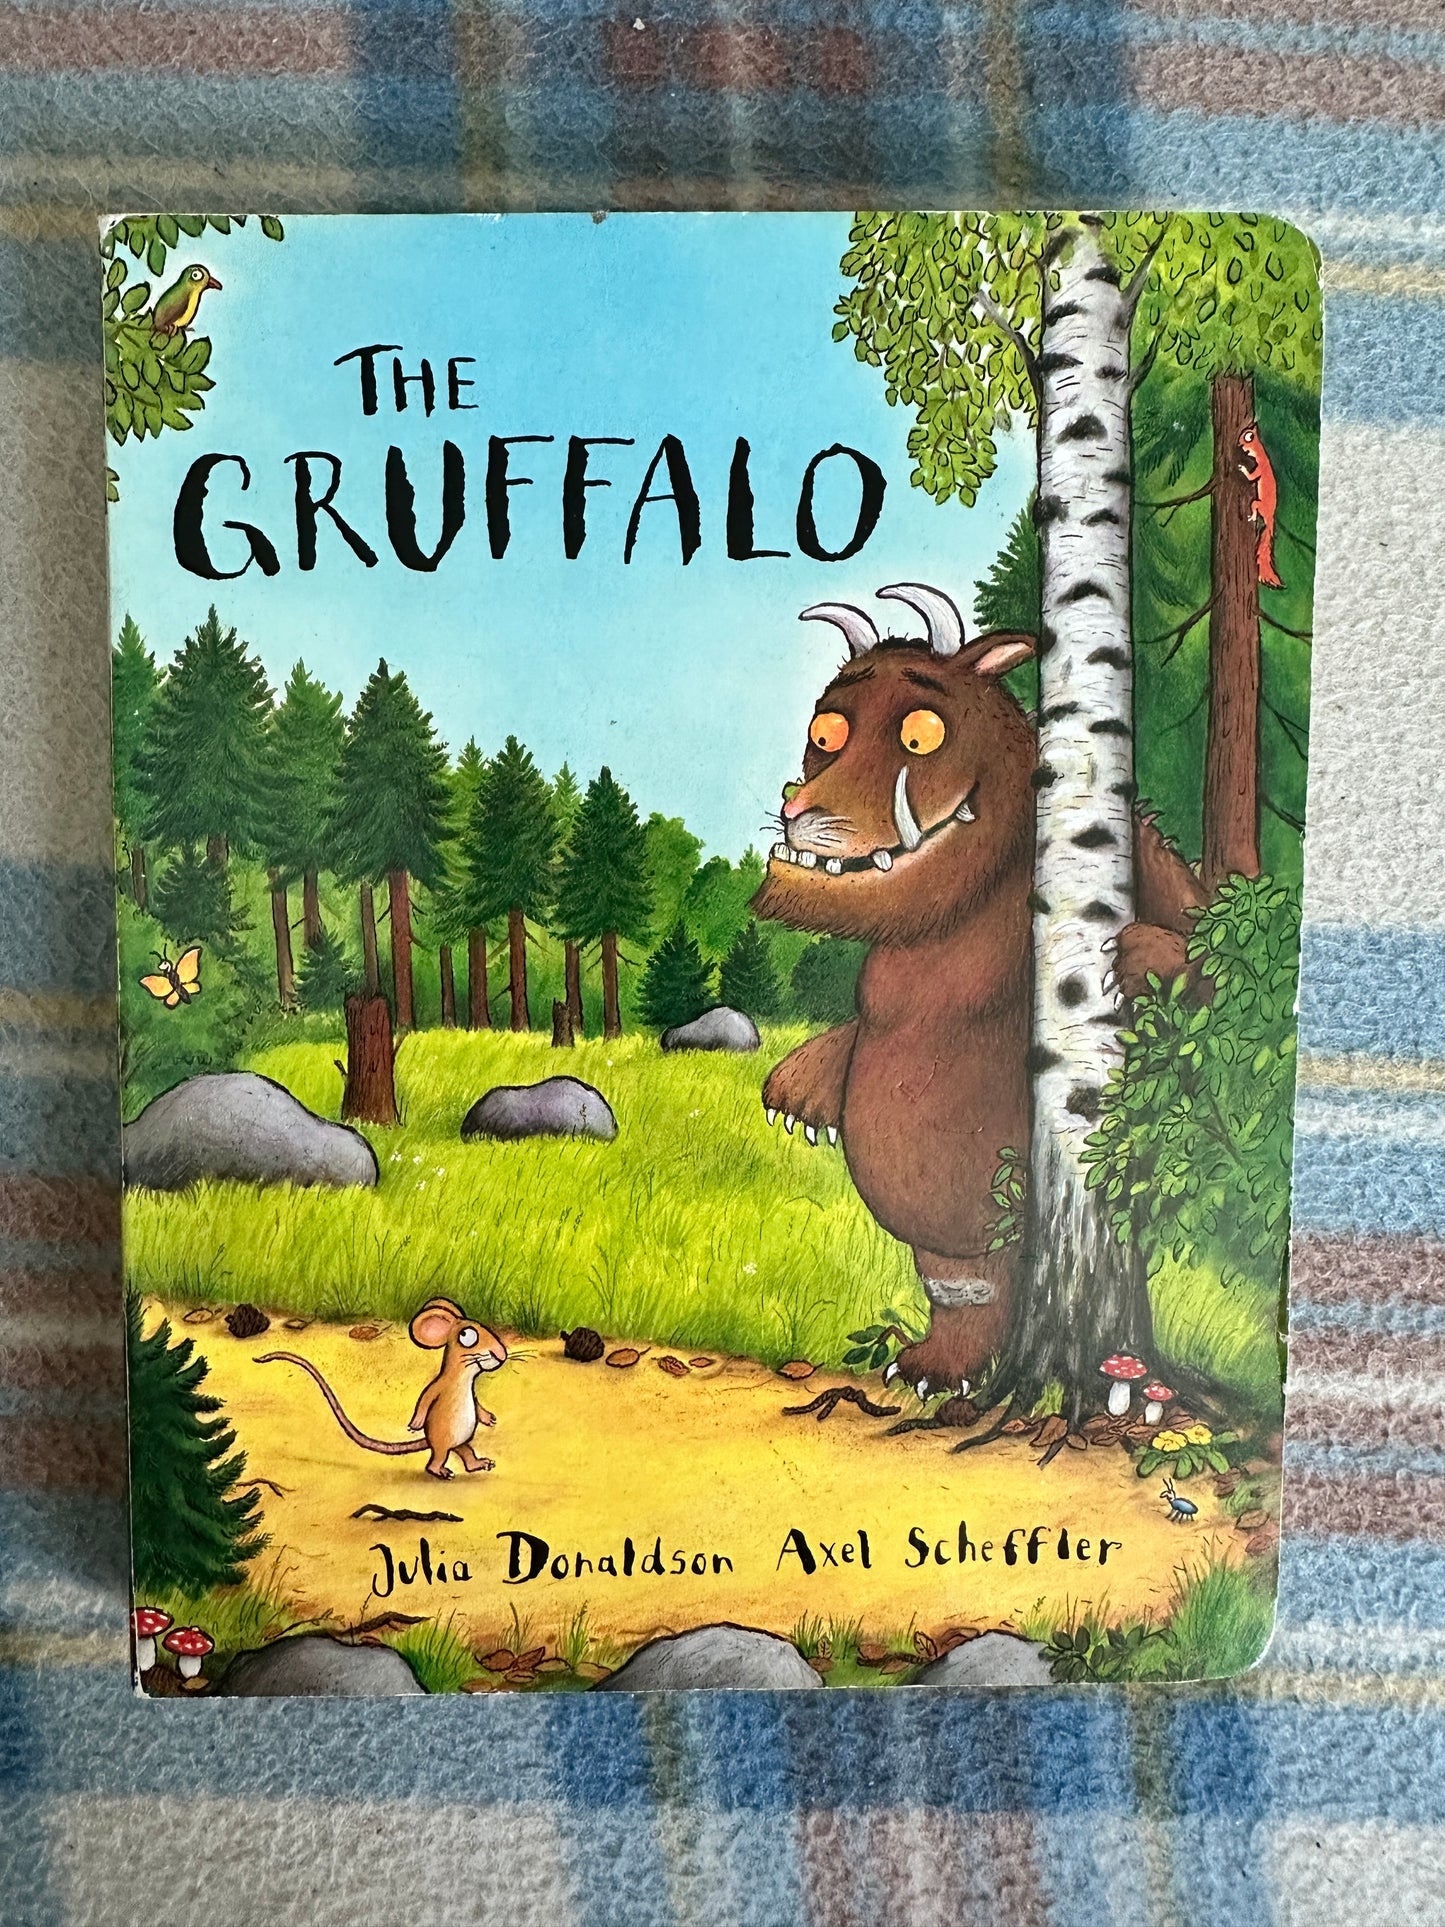 2009 The Gruffalo - Julia Donaldson(Illust Axel Scheffler) MacMillan Children’s Books